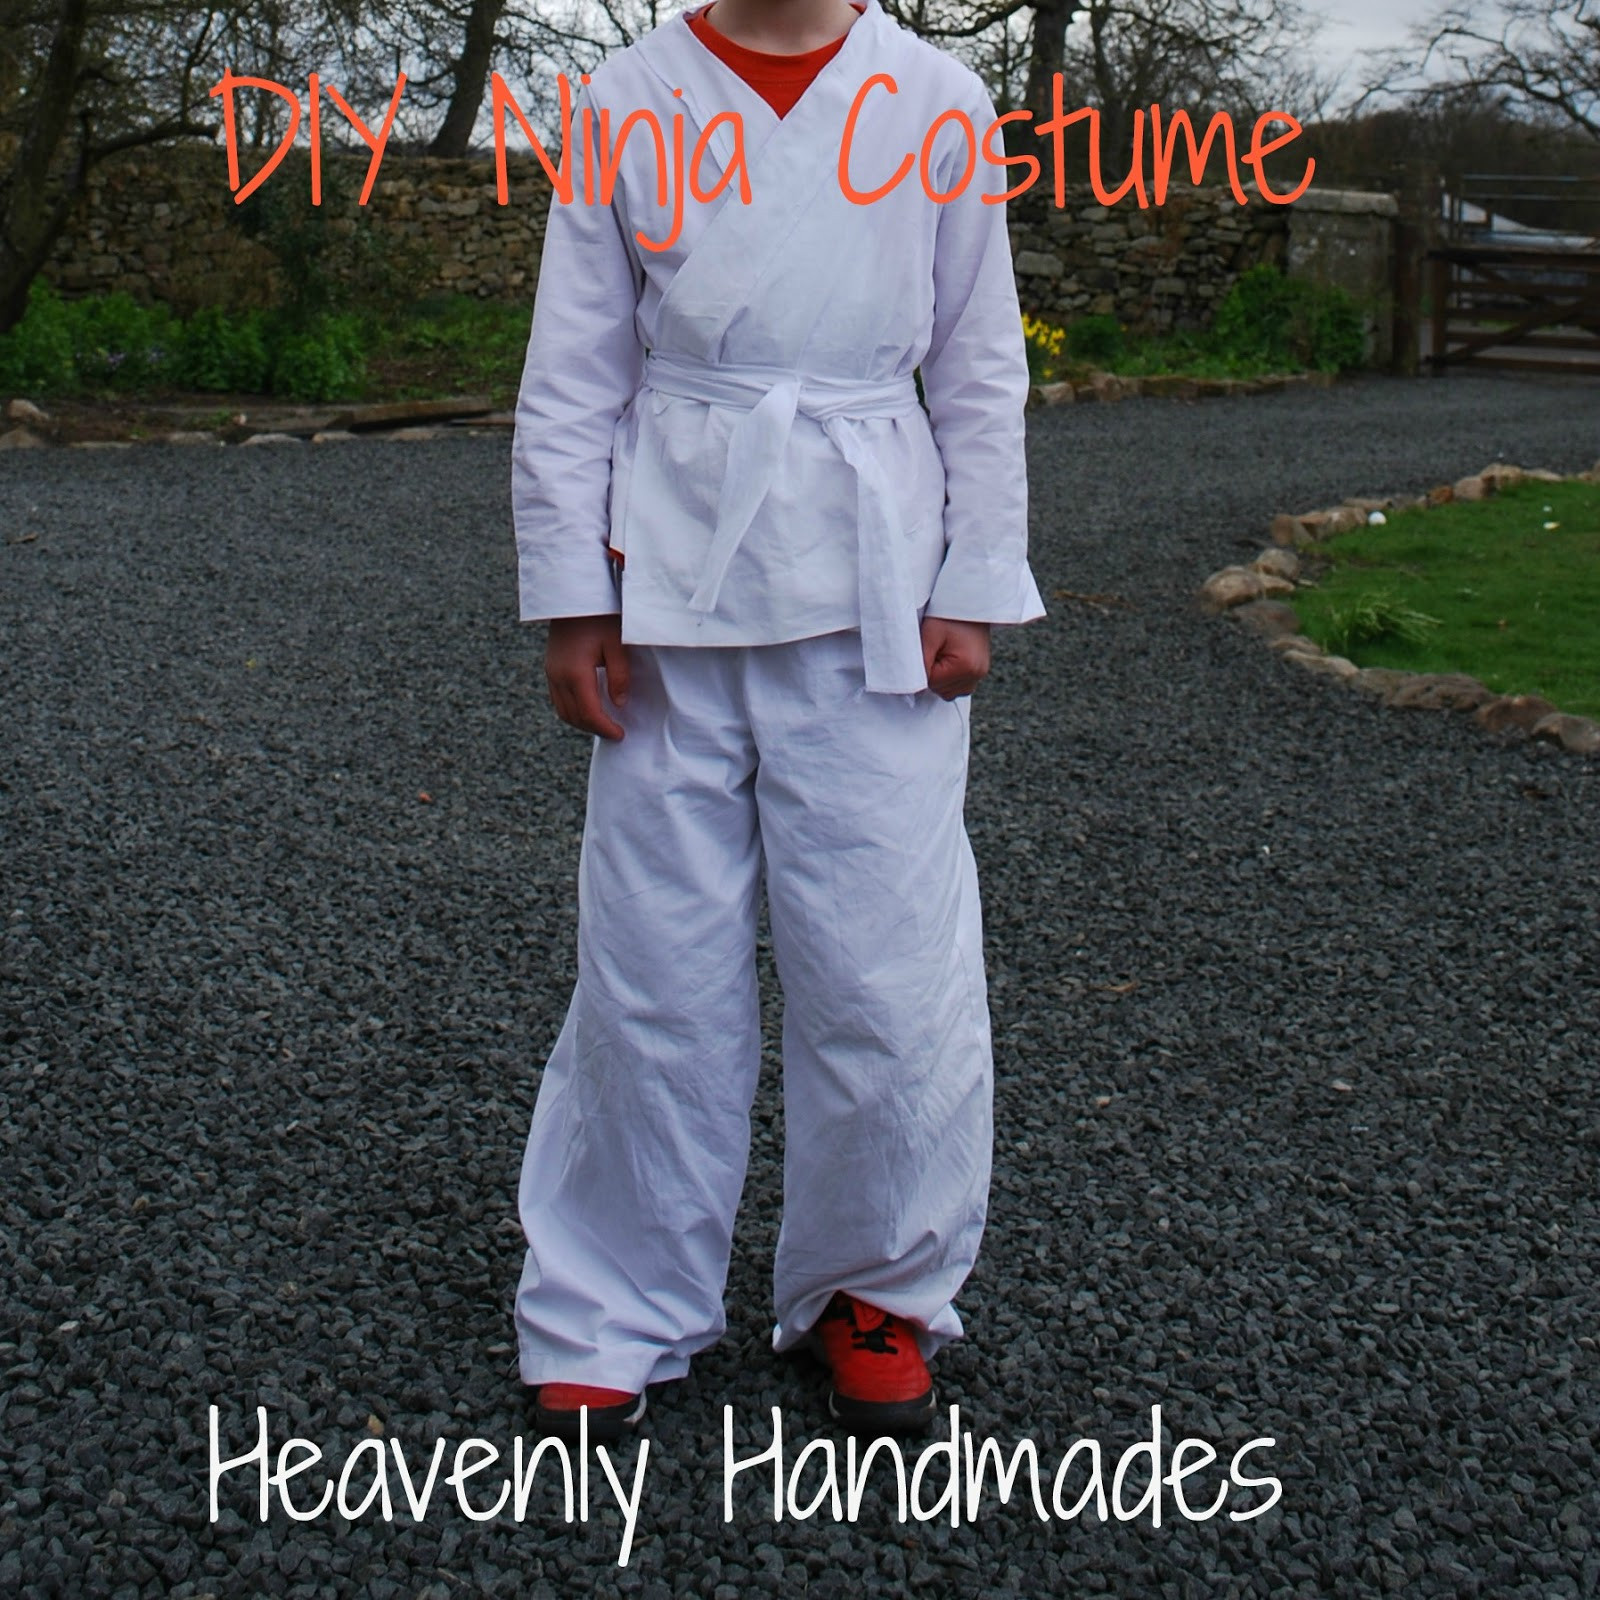 Best ideas about DIY Ninja Costume
. Save or Pin DIY Ninja Costume Heavenly Handmades Now.